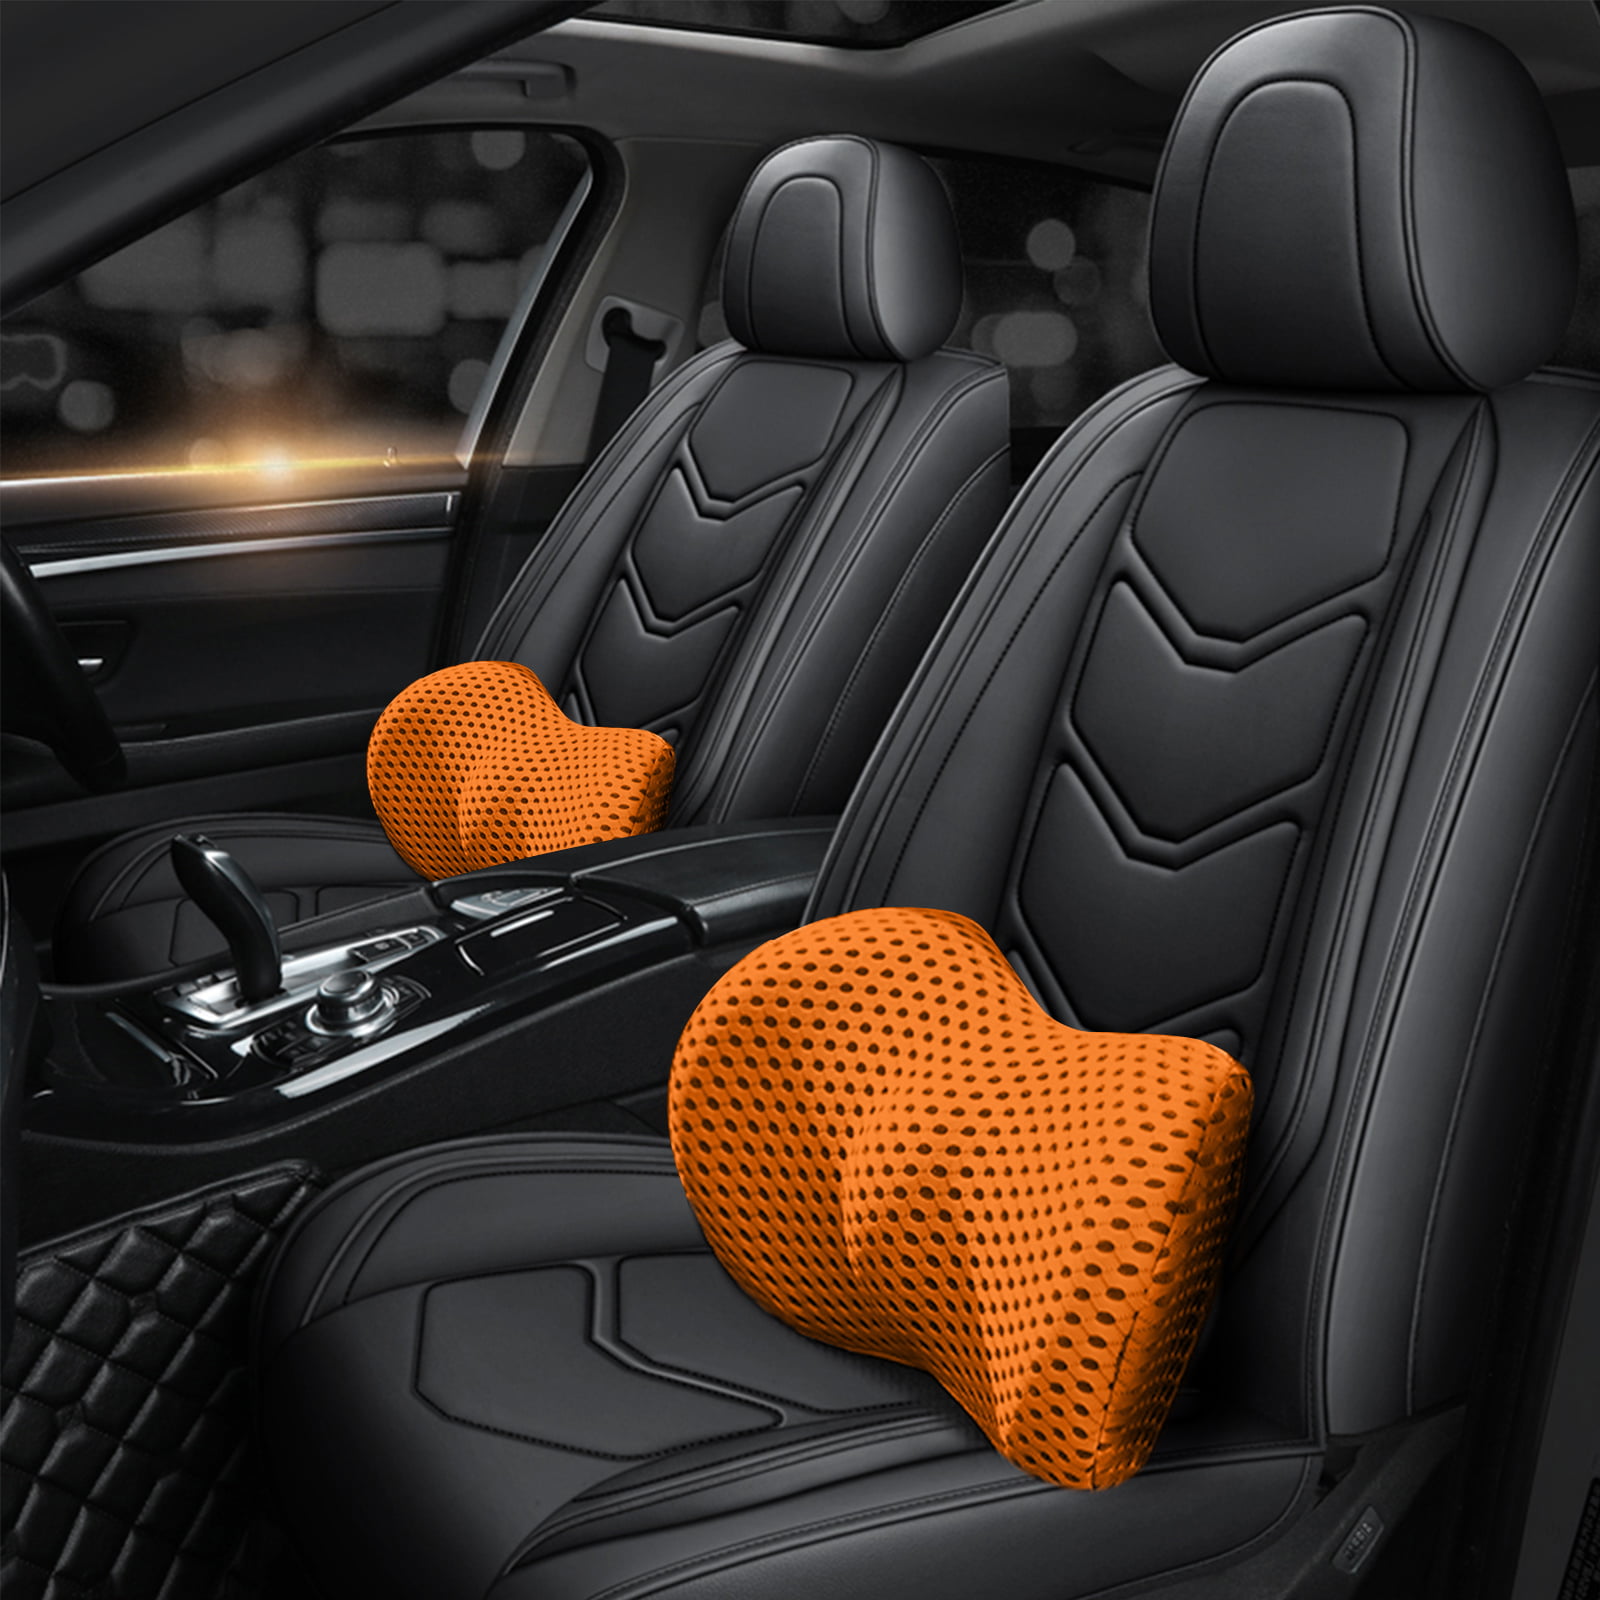 New Orange Car Lumbar Pillow, Car Waist Support Cushion For Lower